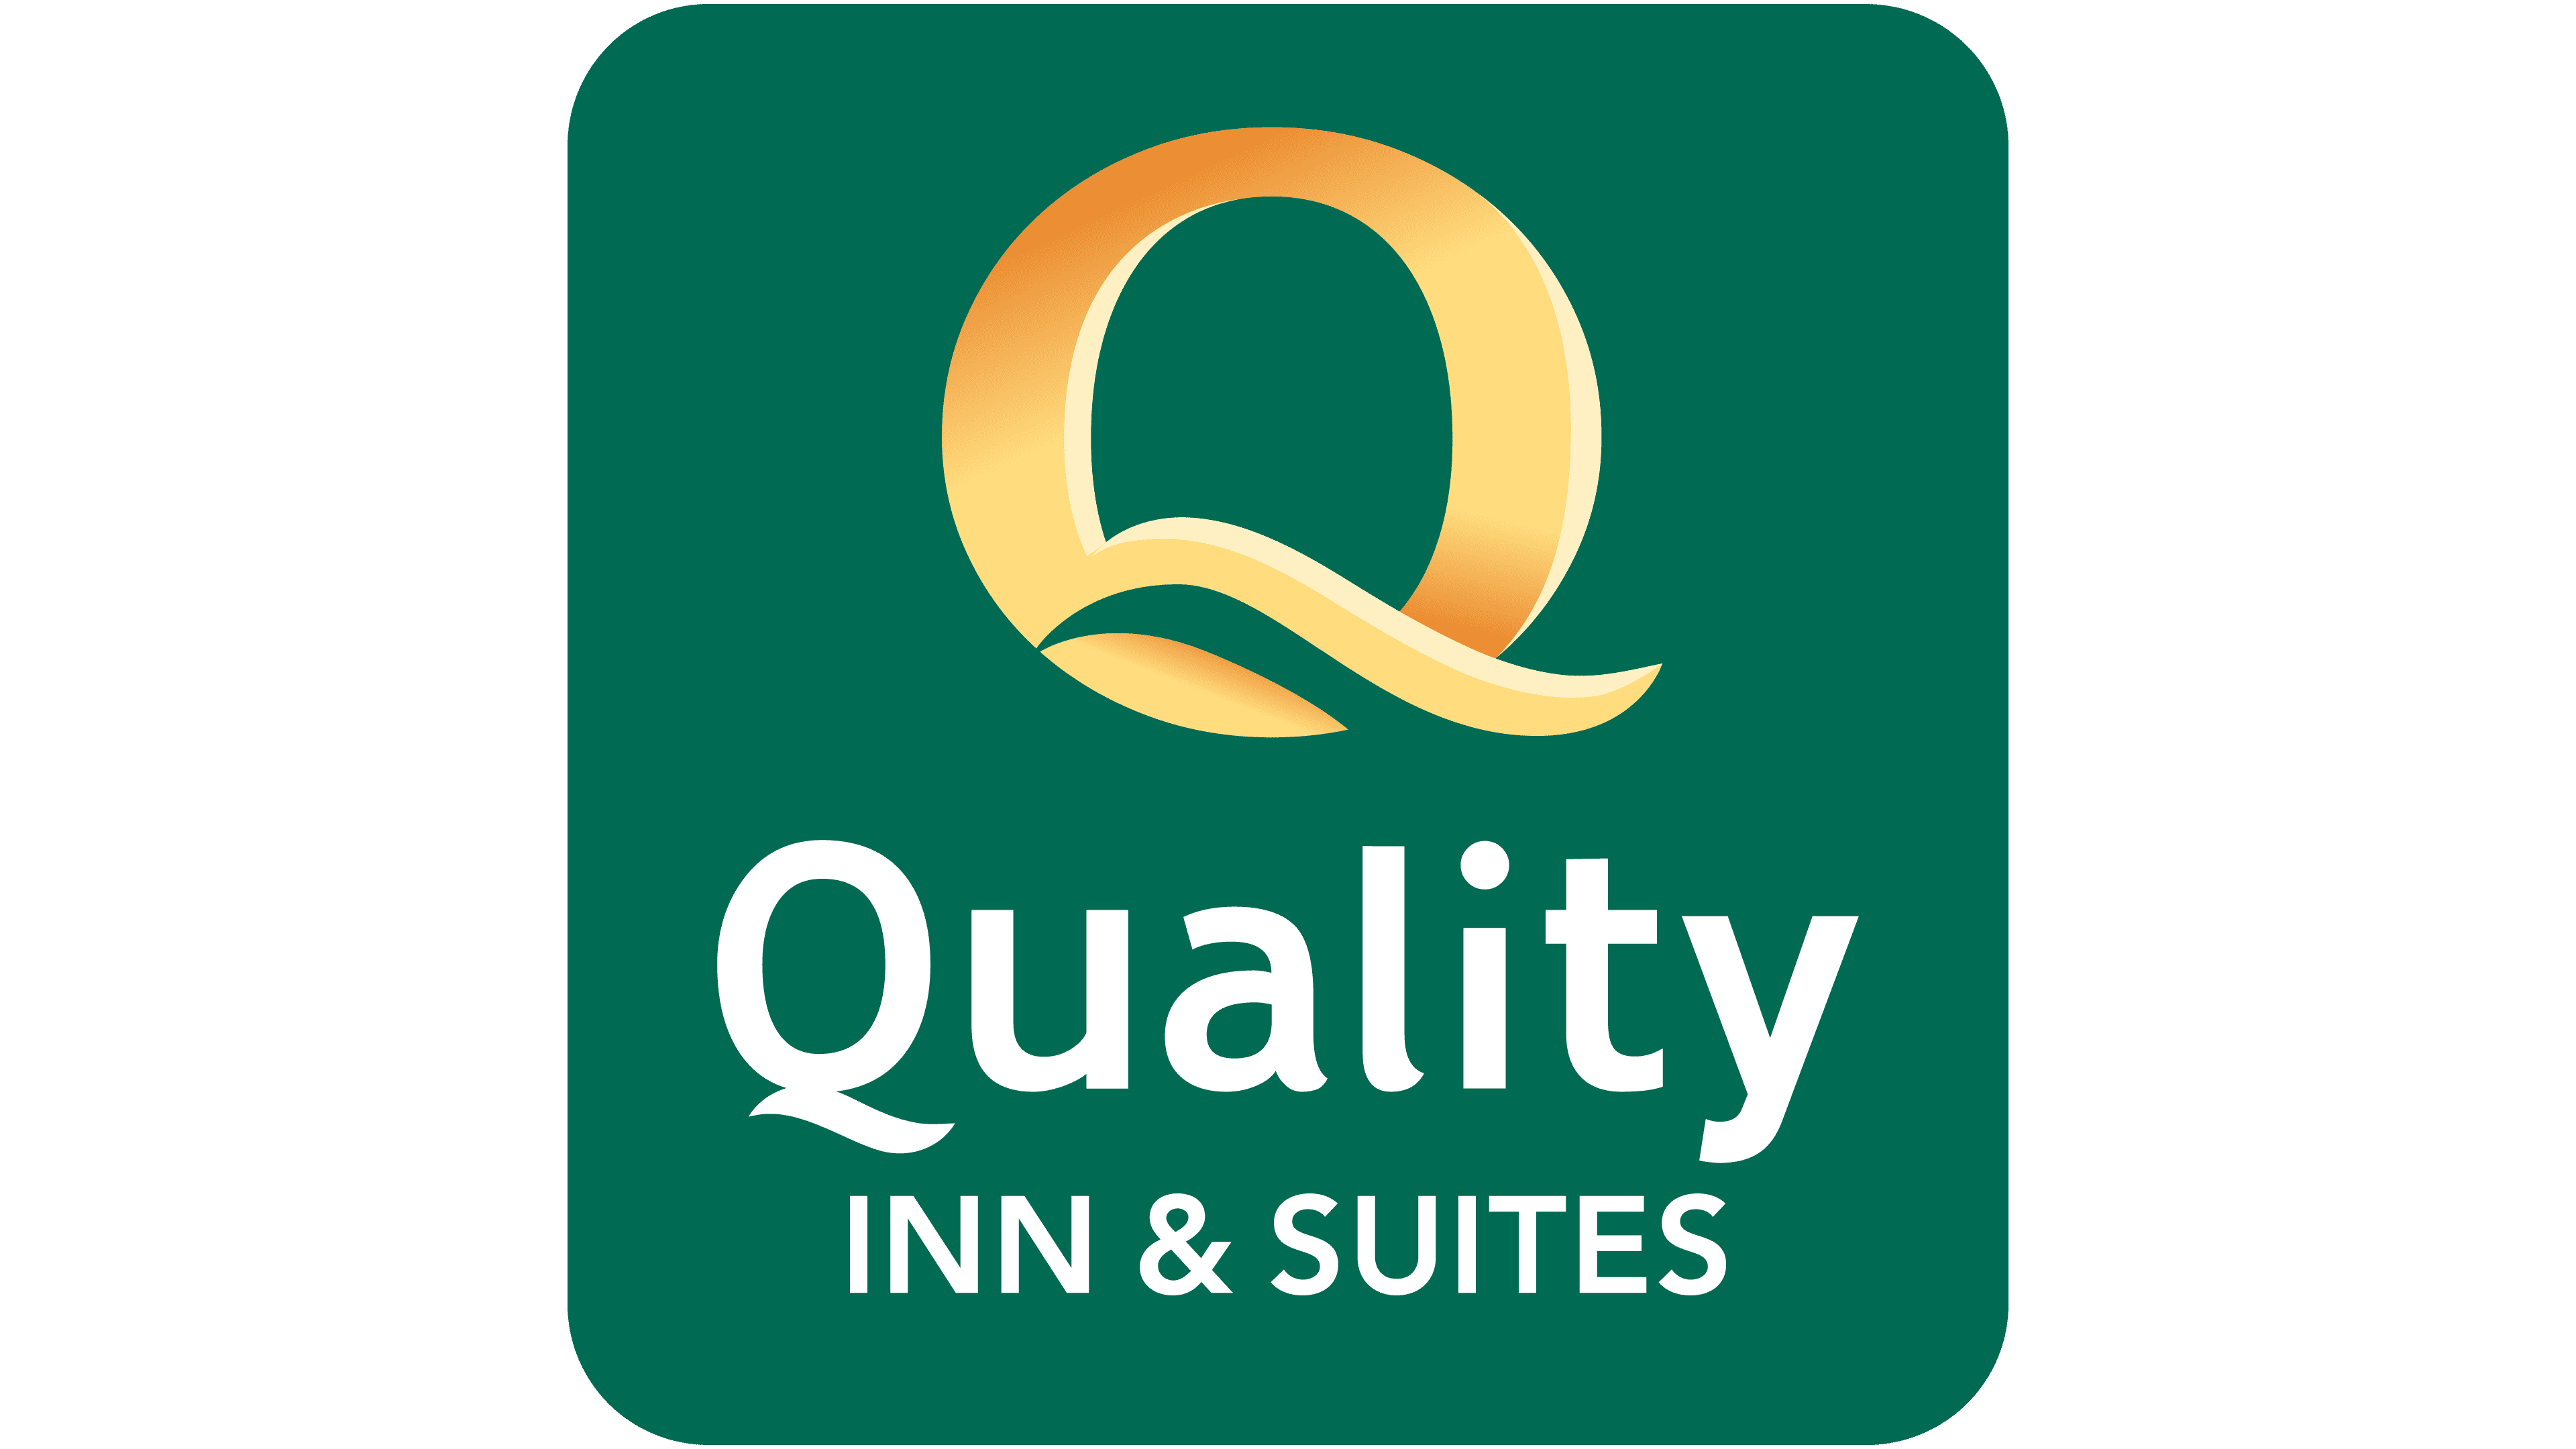 Quality-Inn-logo